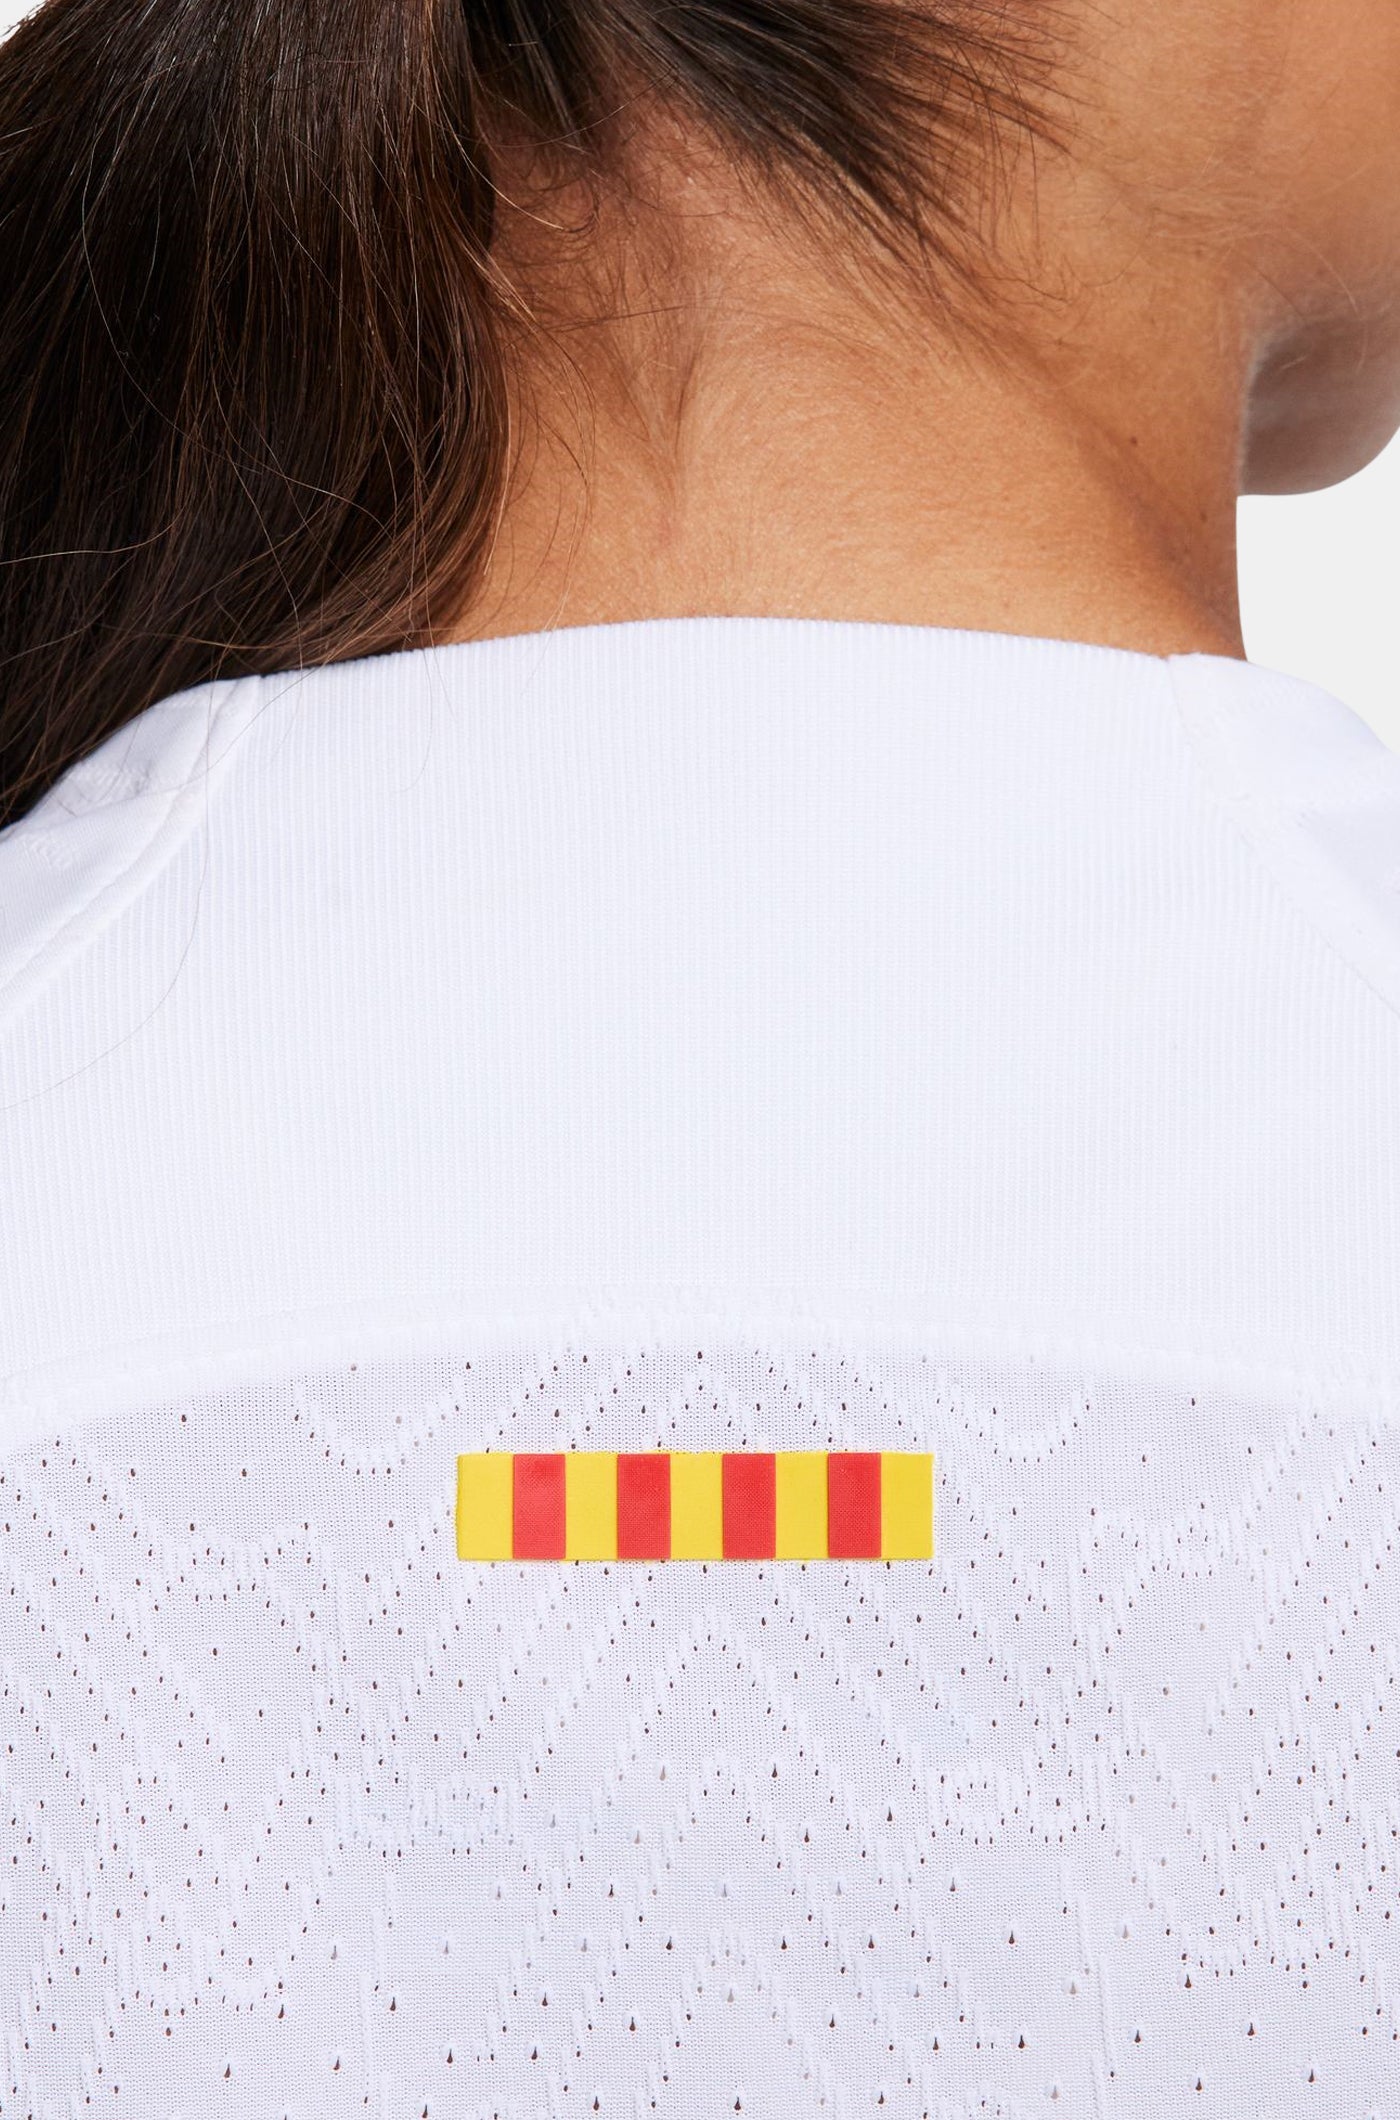 UCL FC Barcelona Away Shirt 23/24 Player’s Edition - Women